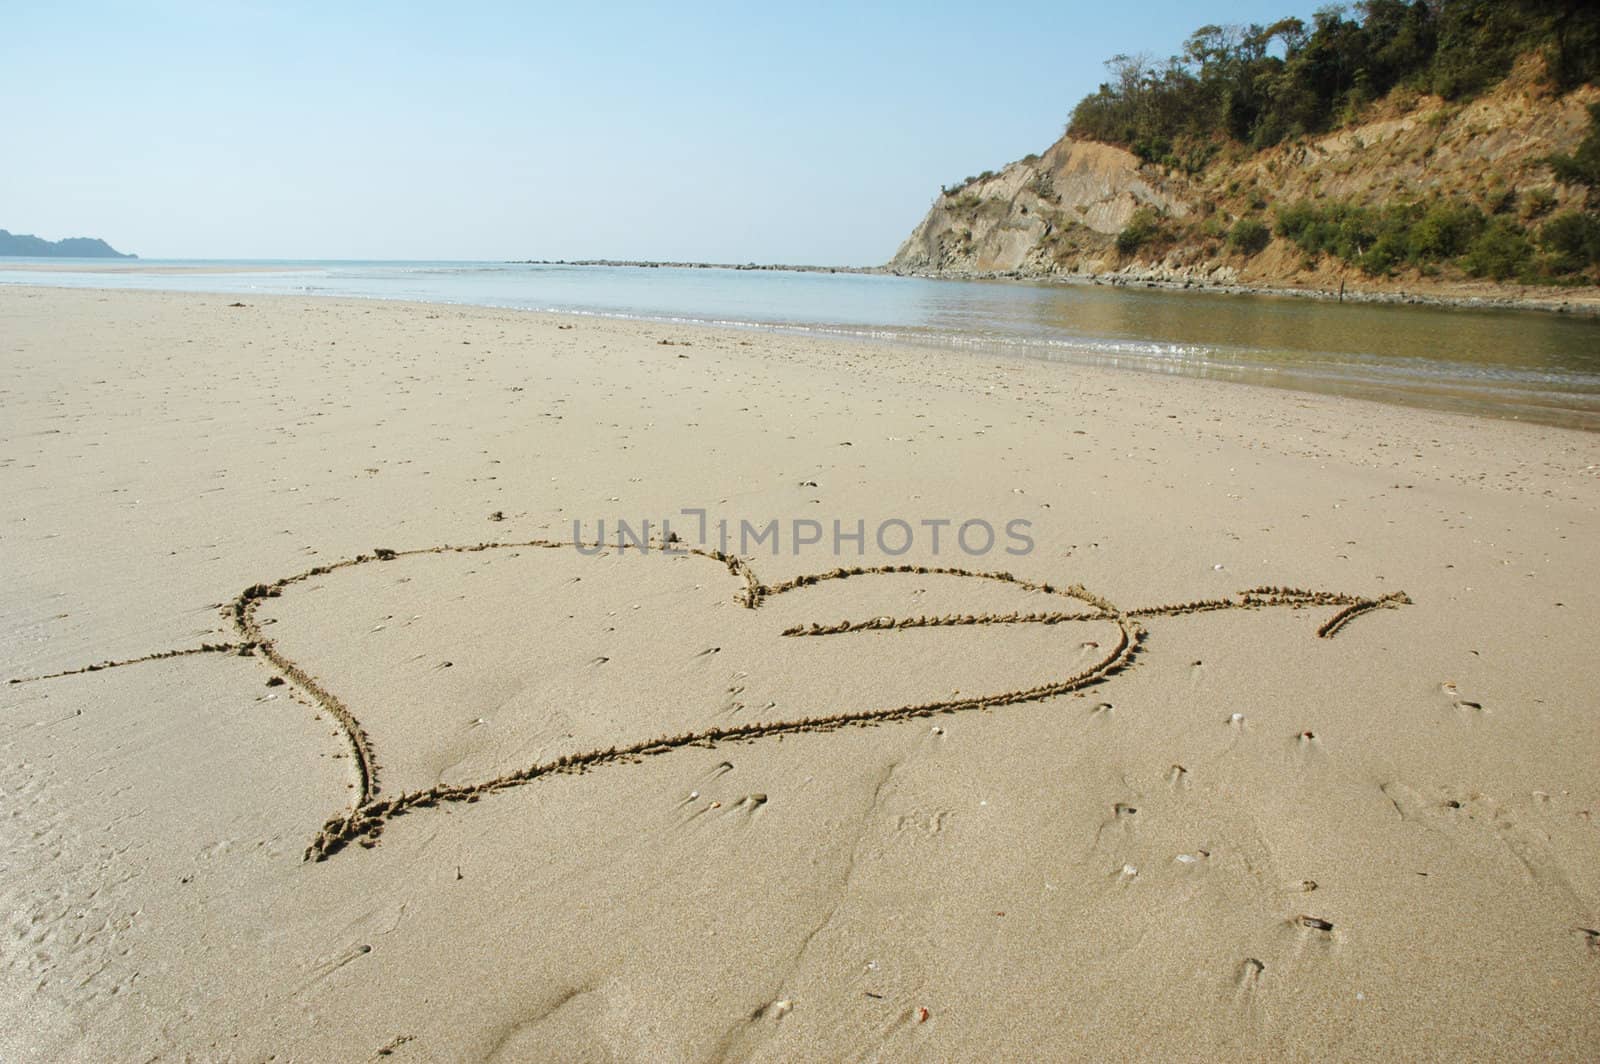 Heart with arrow shooting over drawn on a wet sandy beach